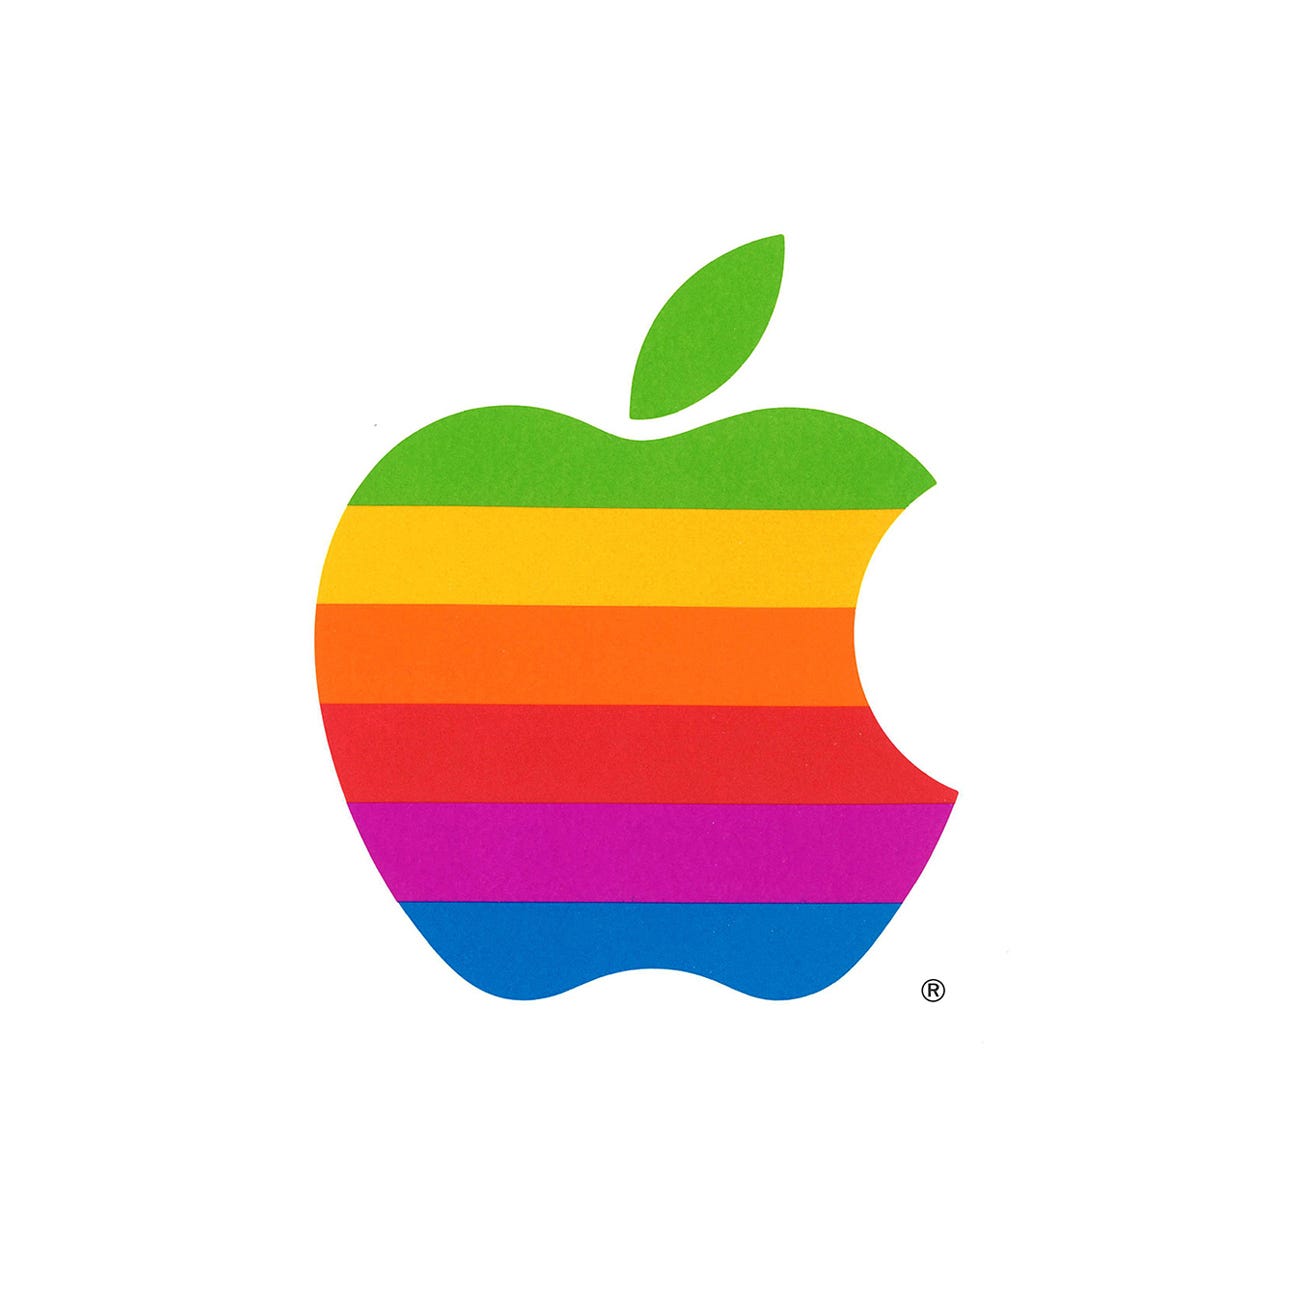 Apple logo by Rob Janoff, 1977